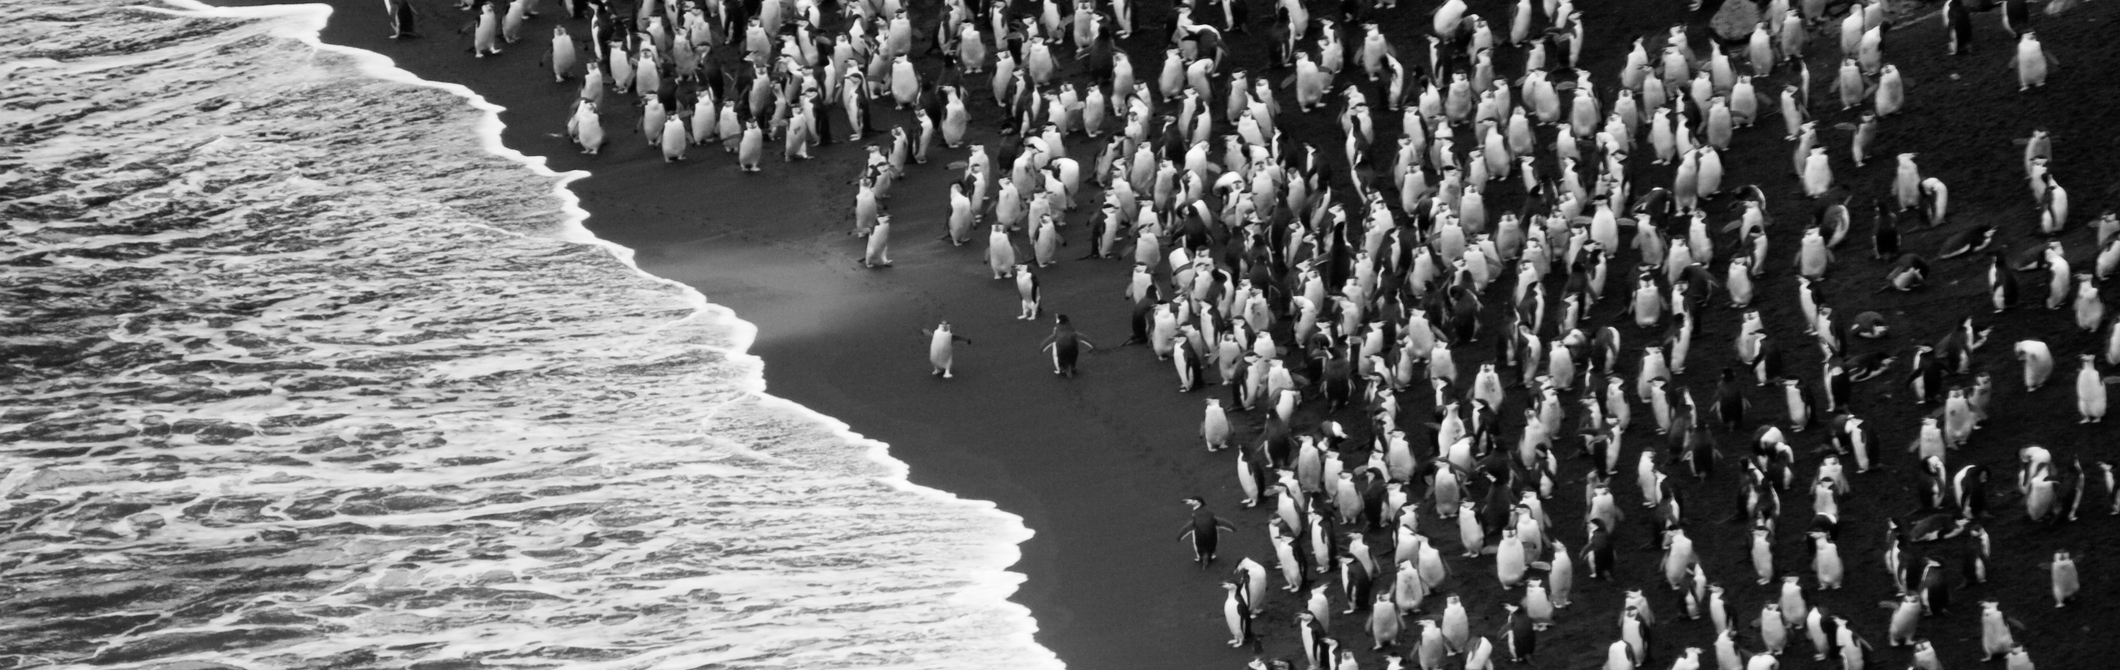 pinguins on a beach